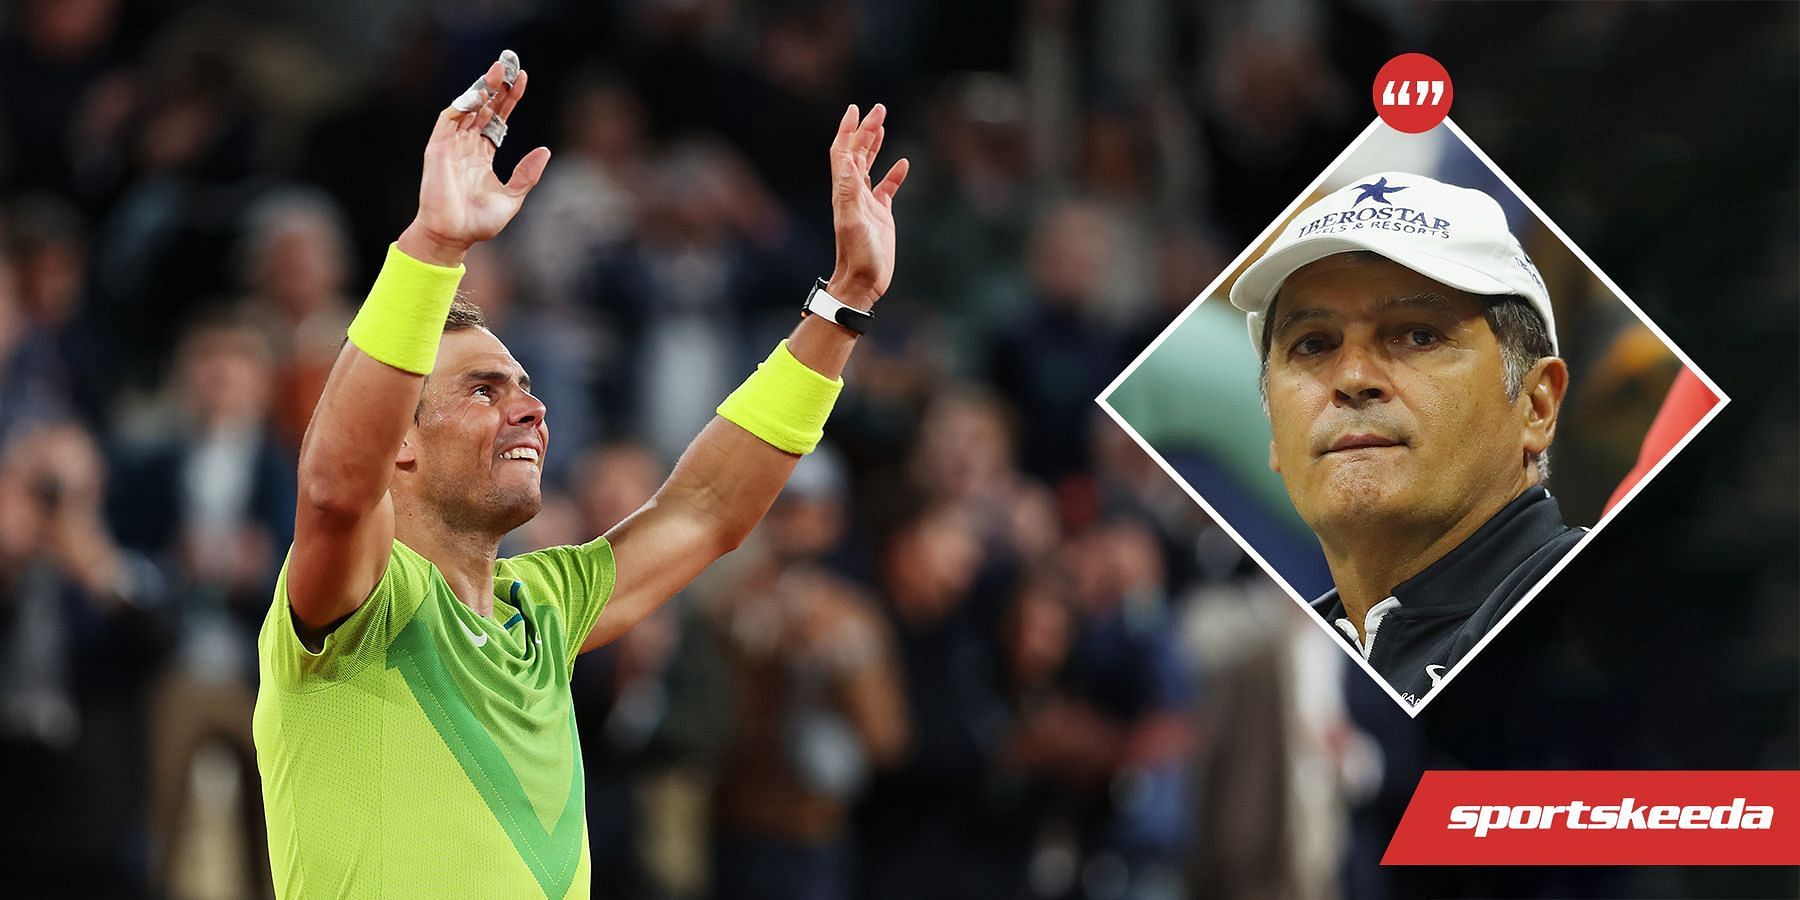 Toni Nadal praises his nephew Rafa Nadal